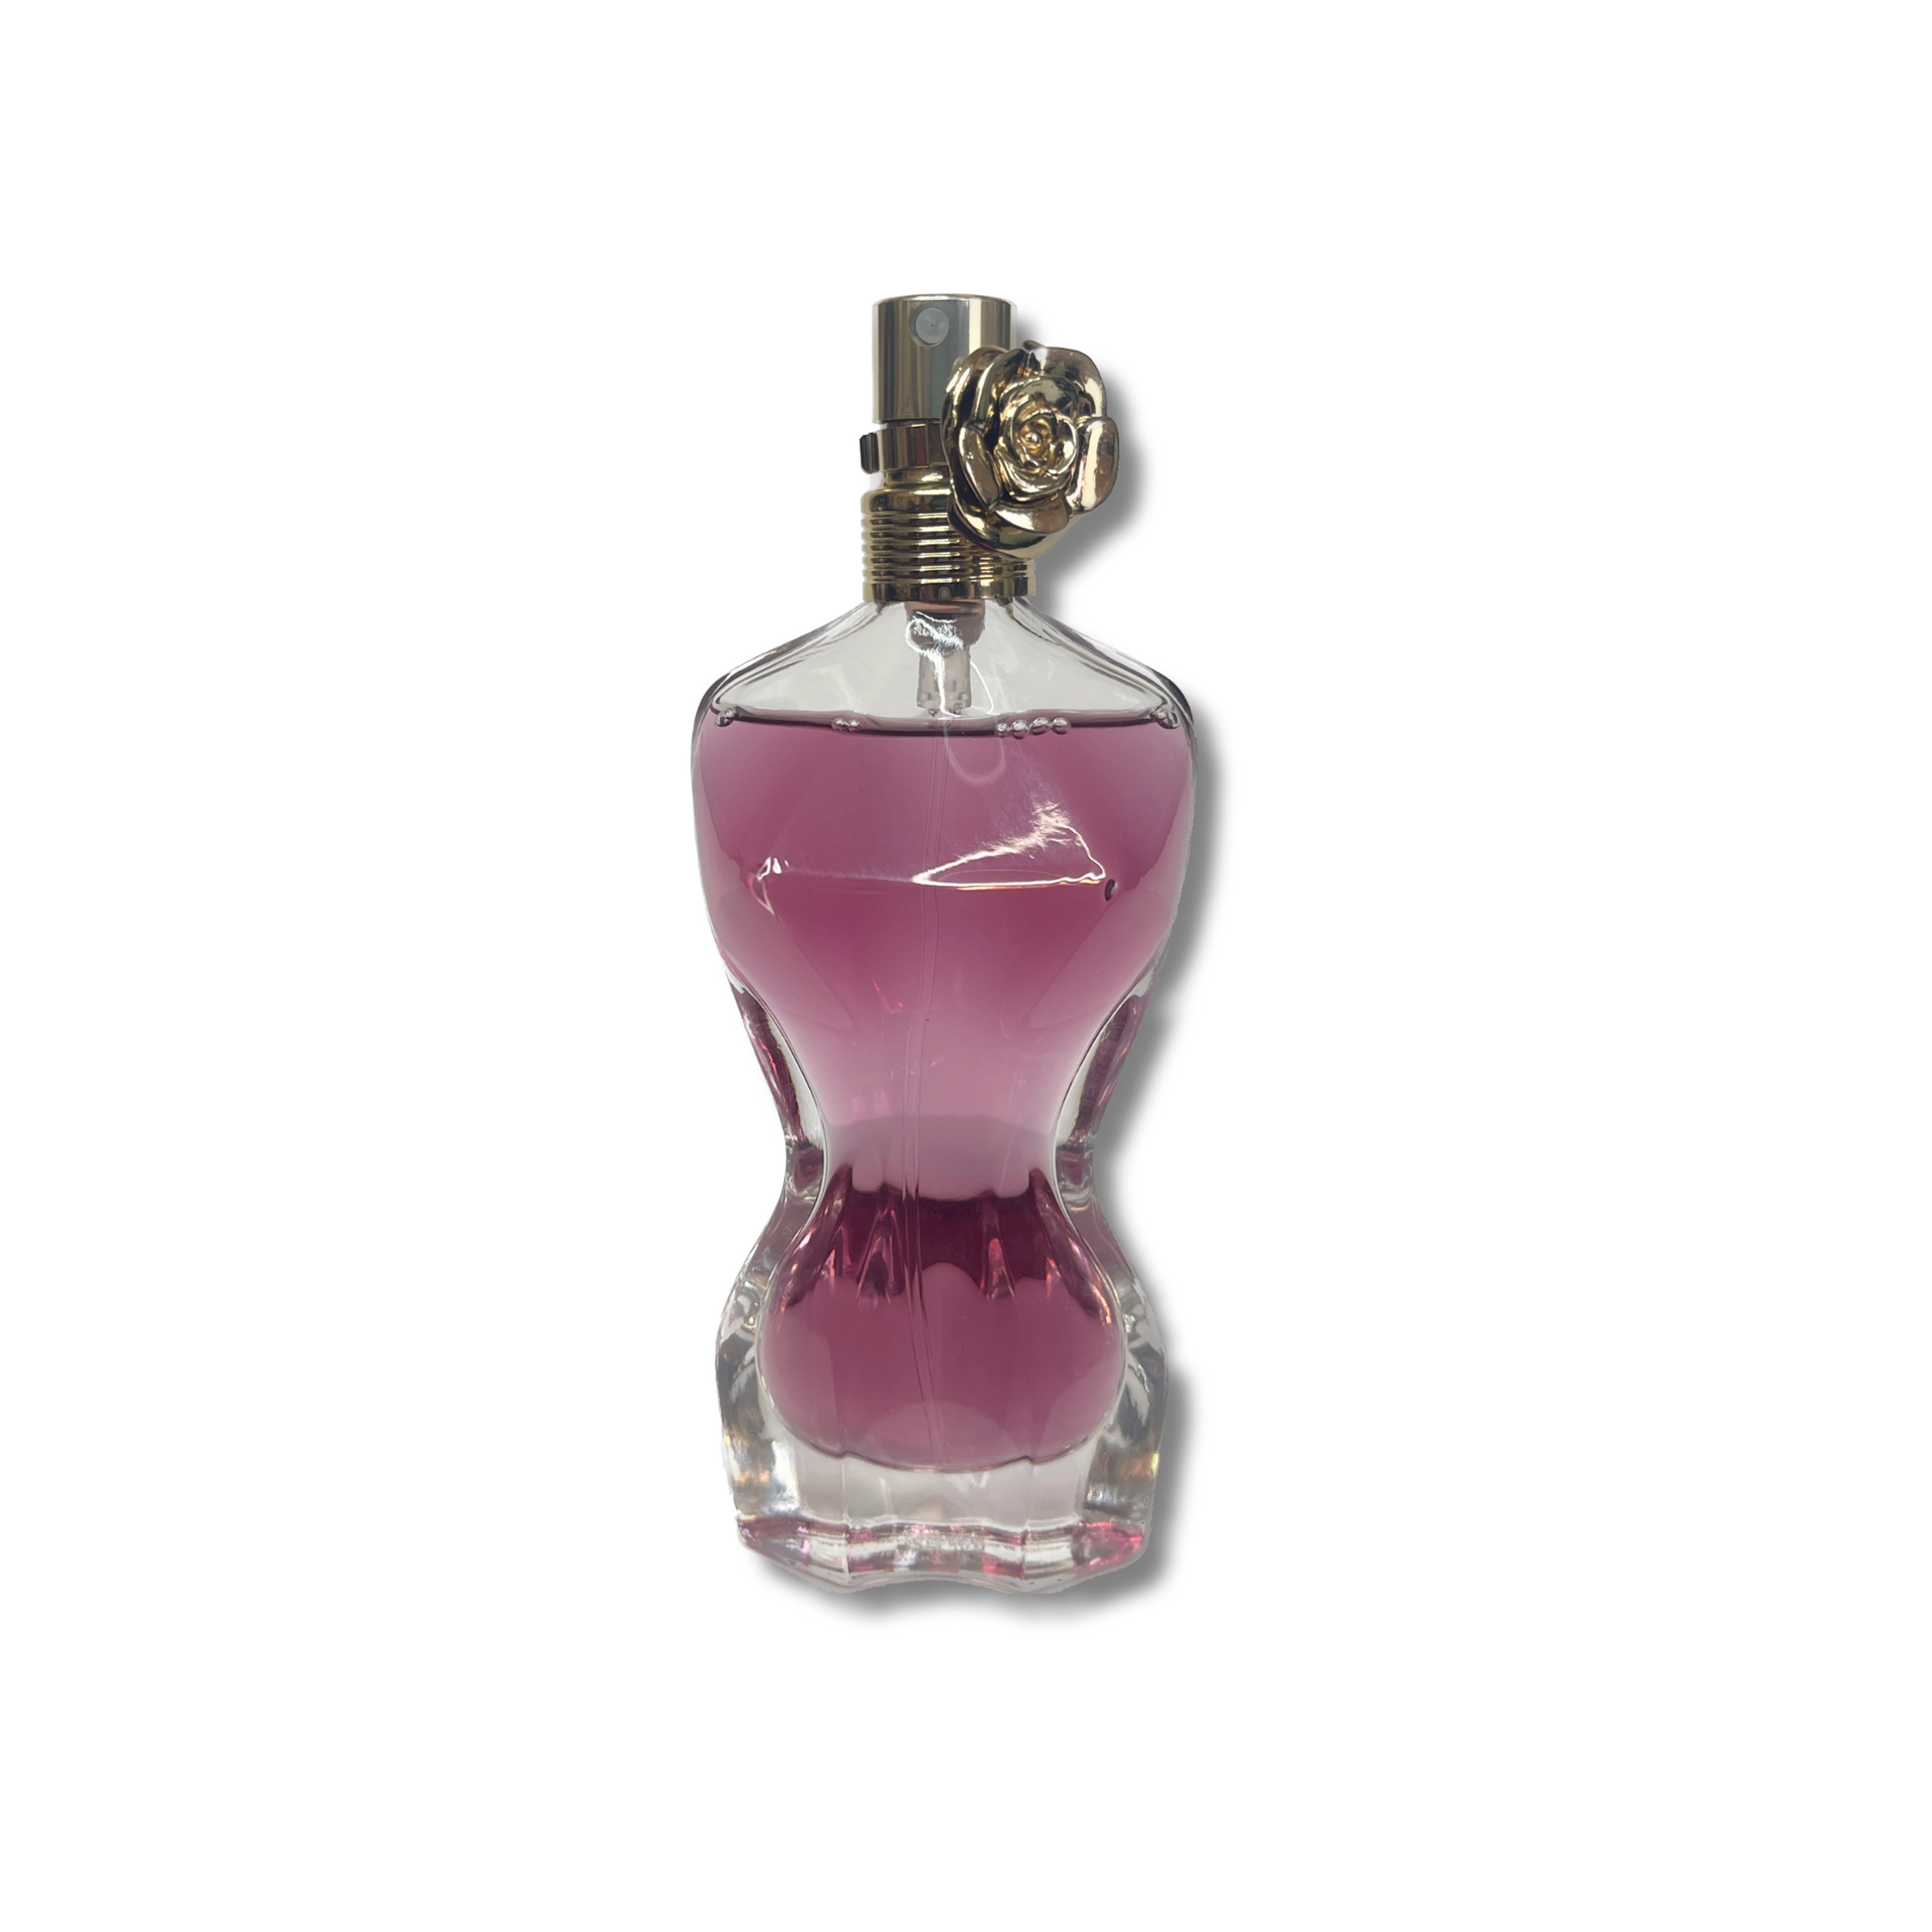 La Belle By Jean Paul Gaultier Perfume sample & Subscription